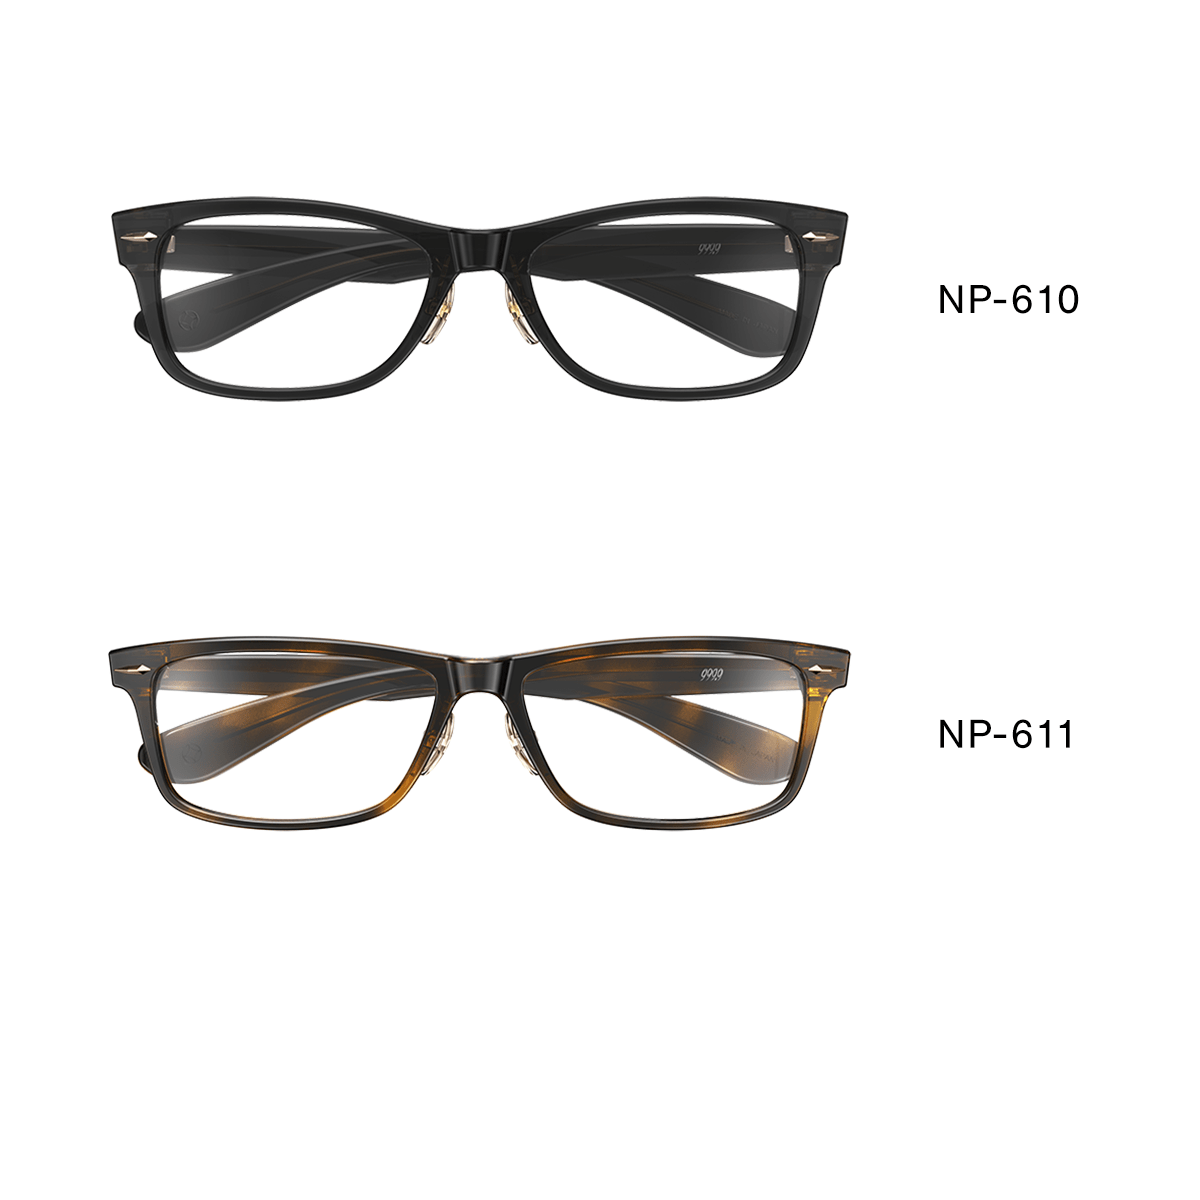 NP-610 series